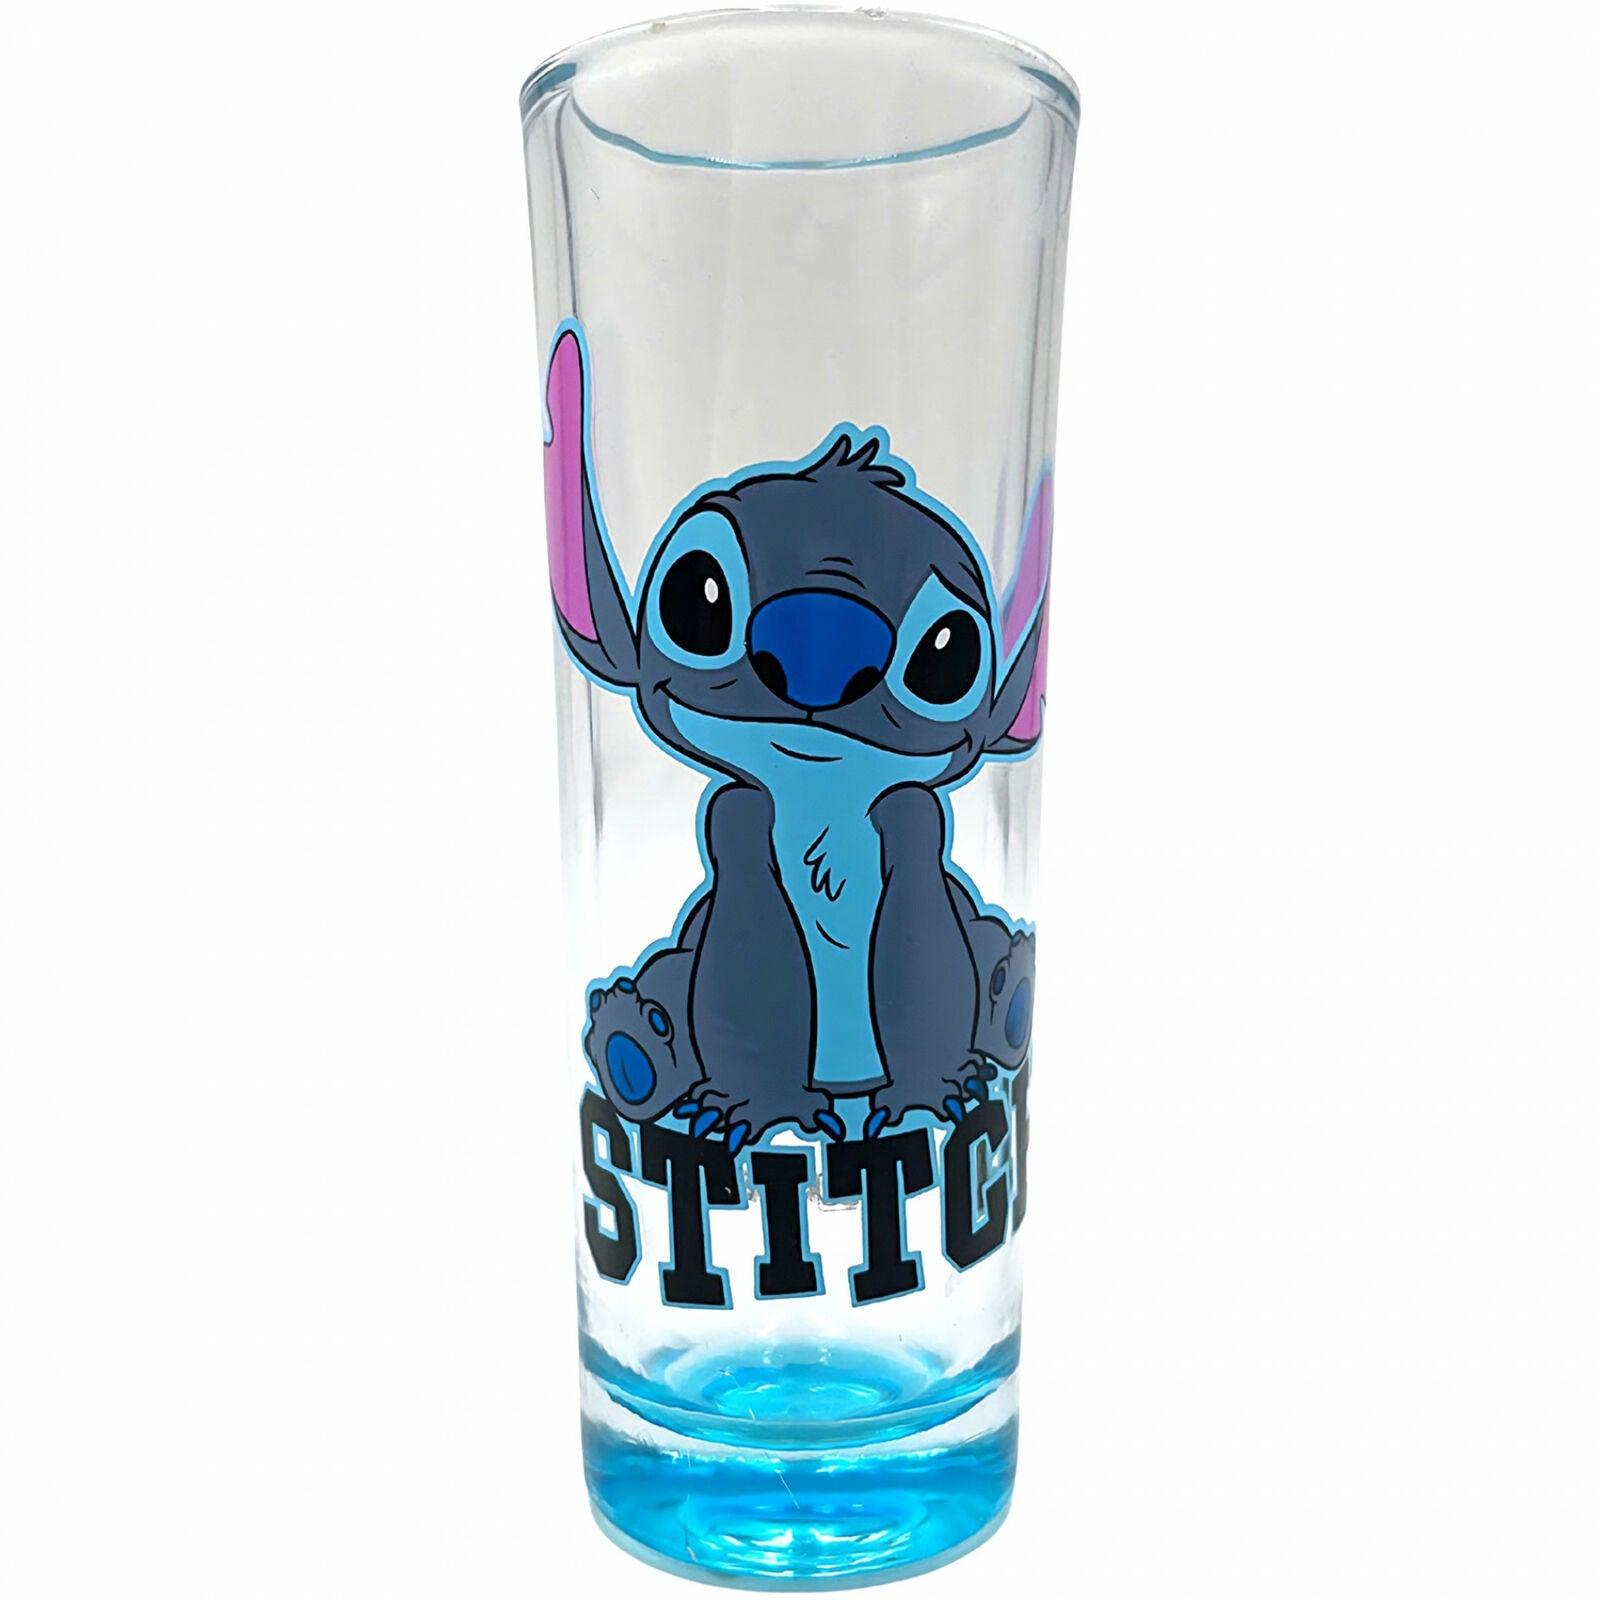 Lilo & Stitch Disney Collectible Cups Plastic Drinking Glasses 4